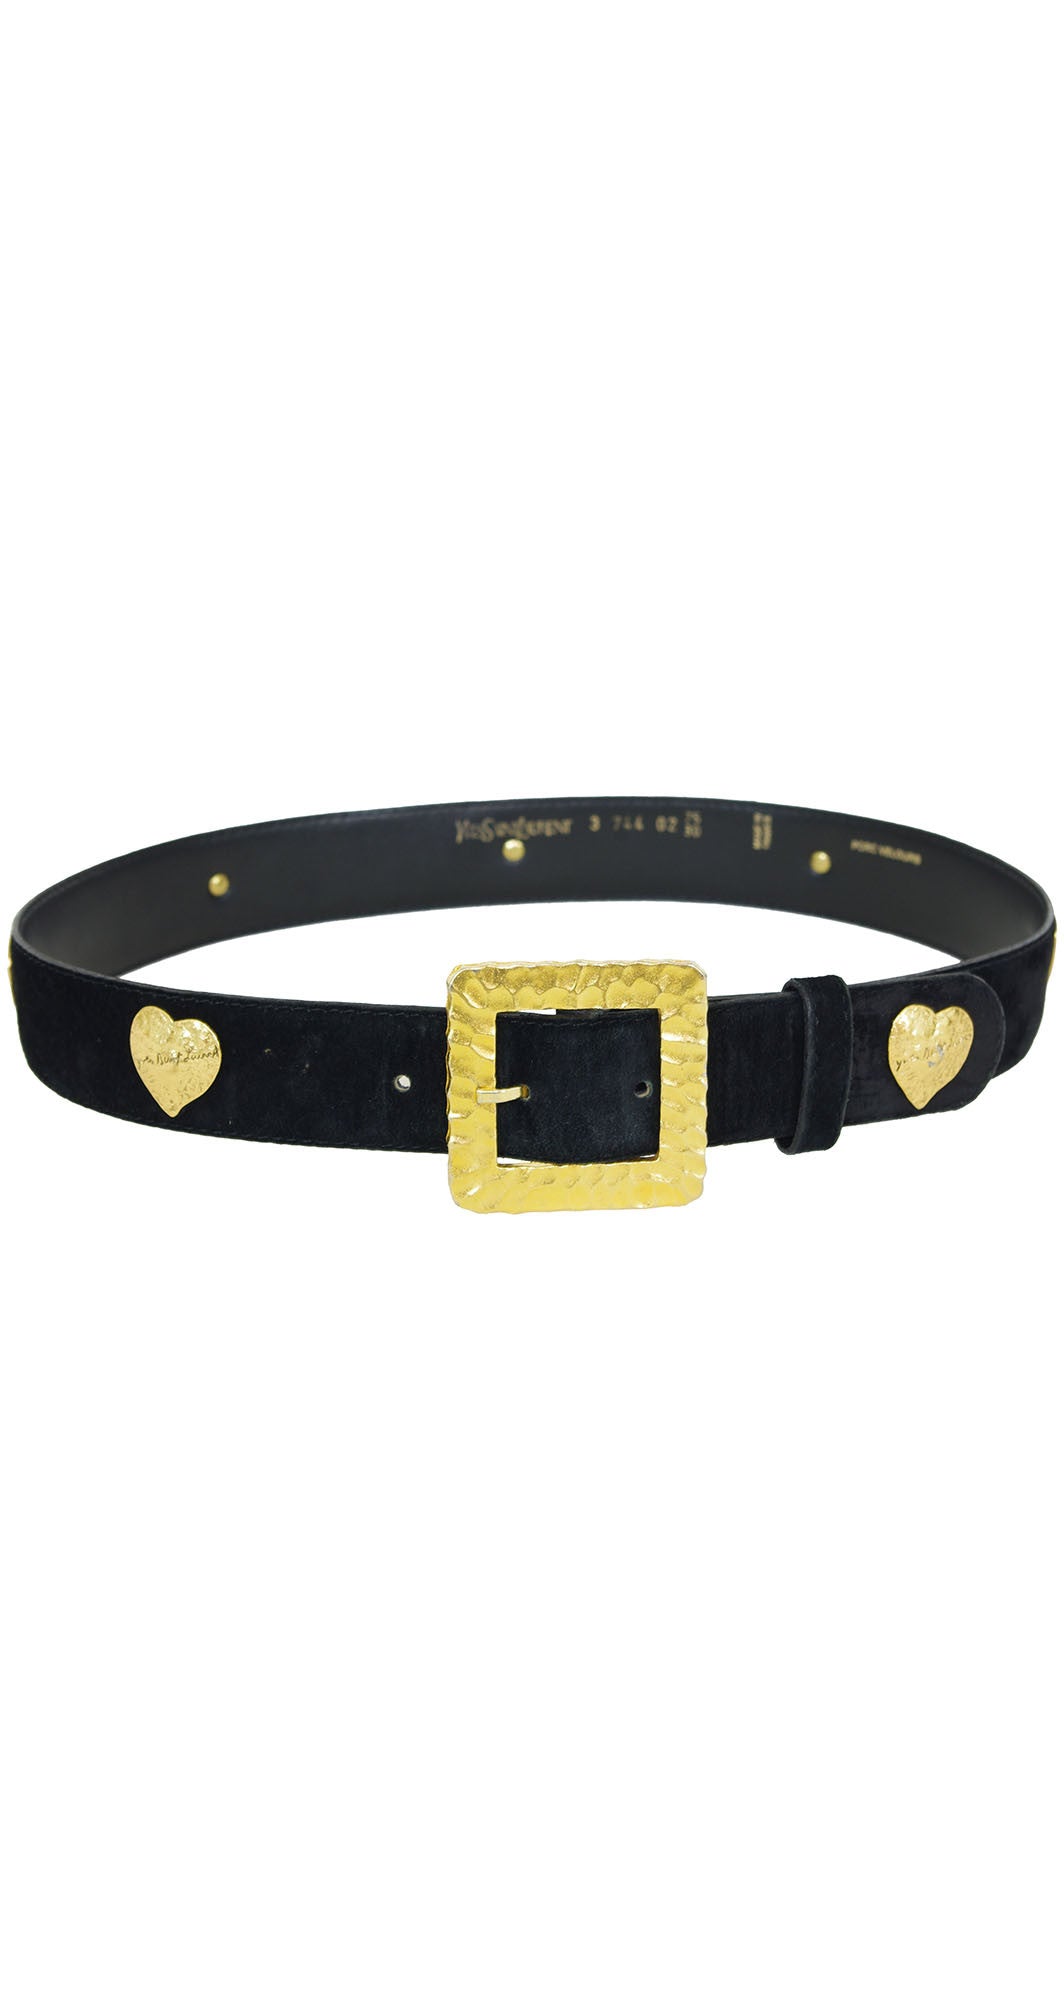 VTG Harve Benard Size M Black Suede Classic Dress Belt with Gold Chain  Buckle